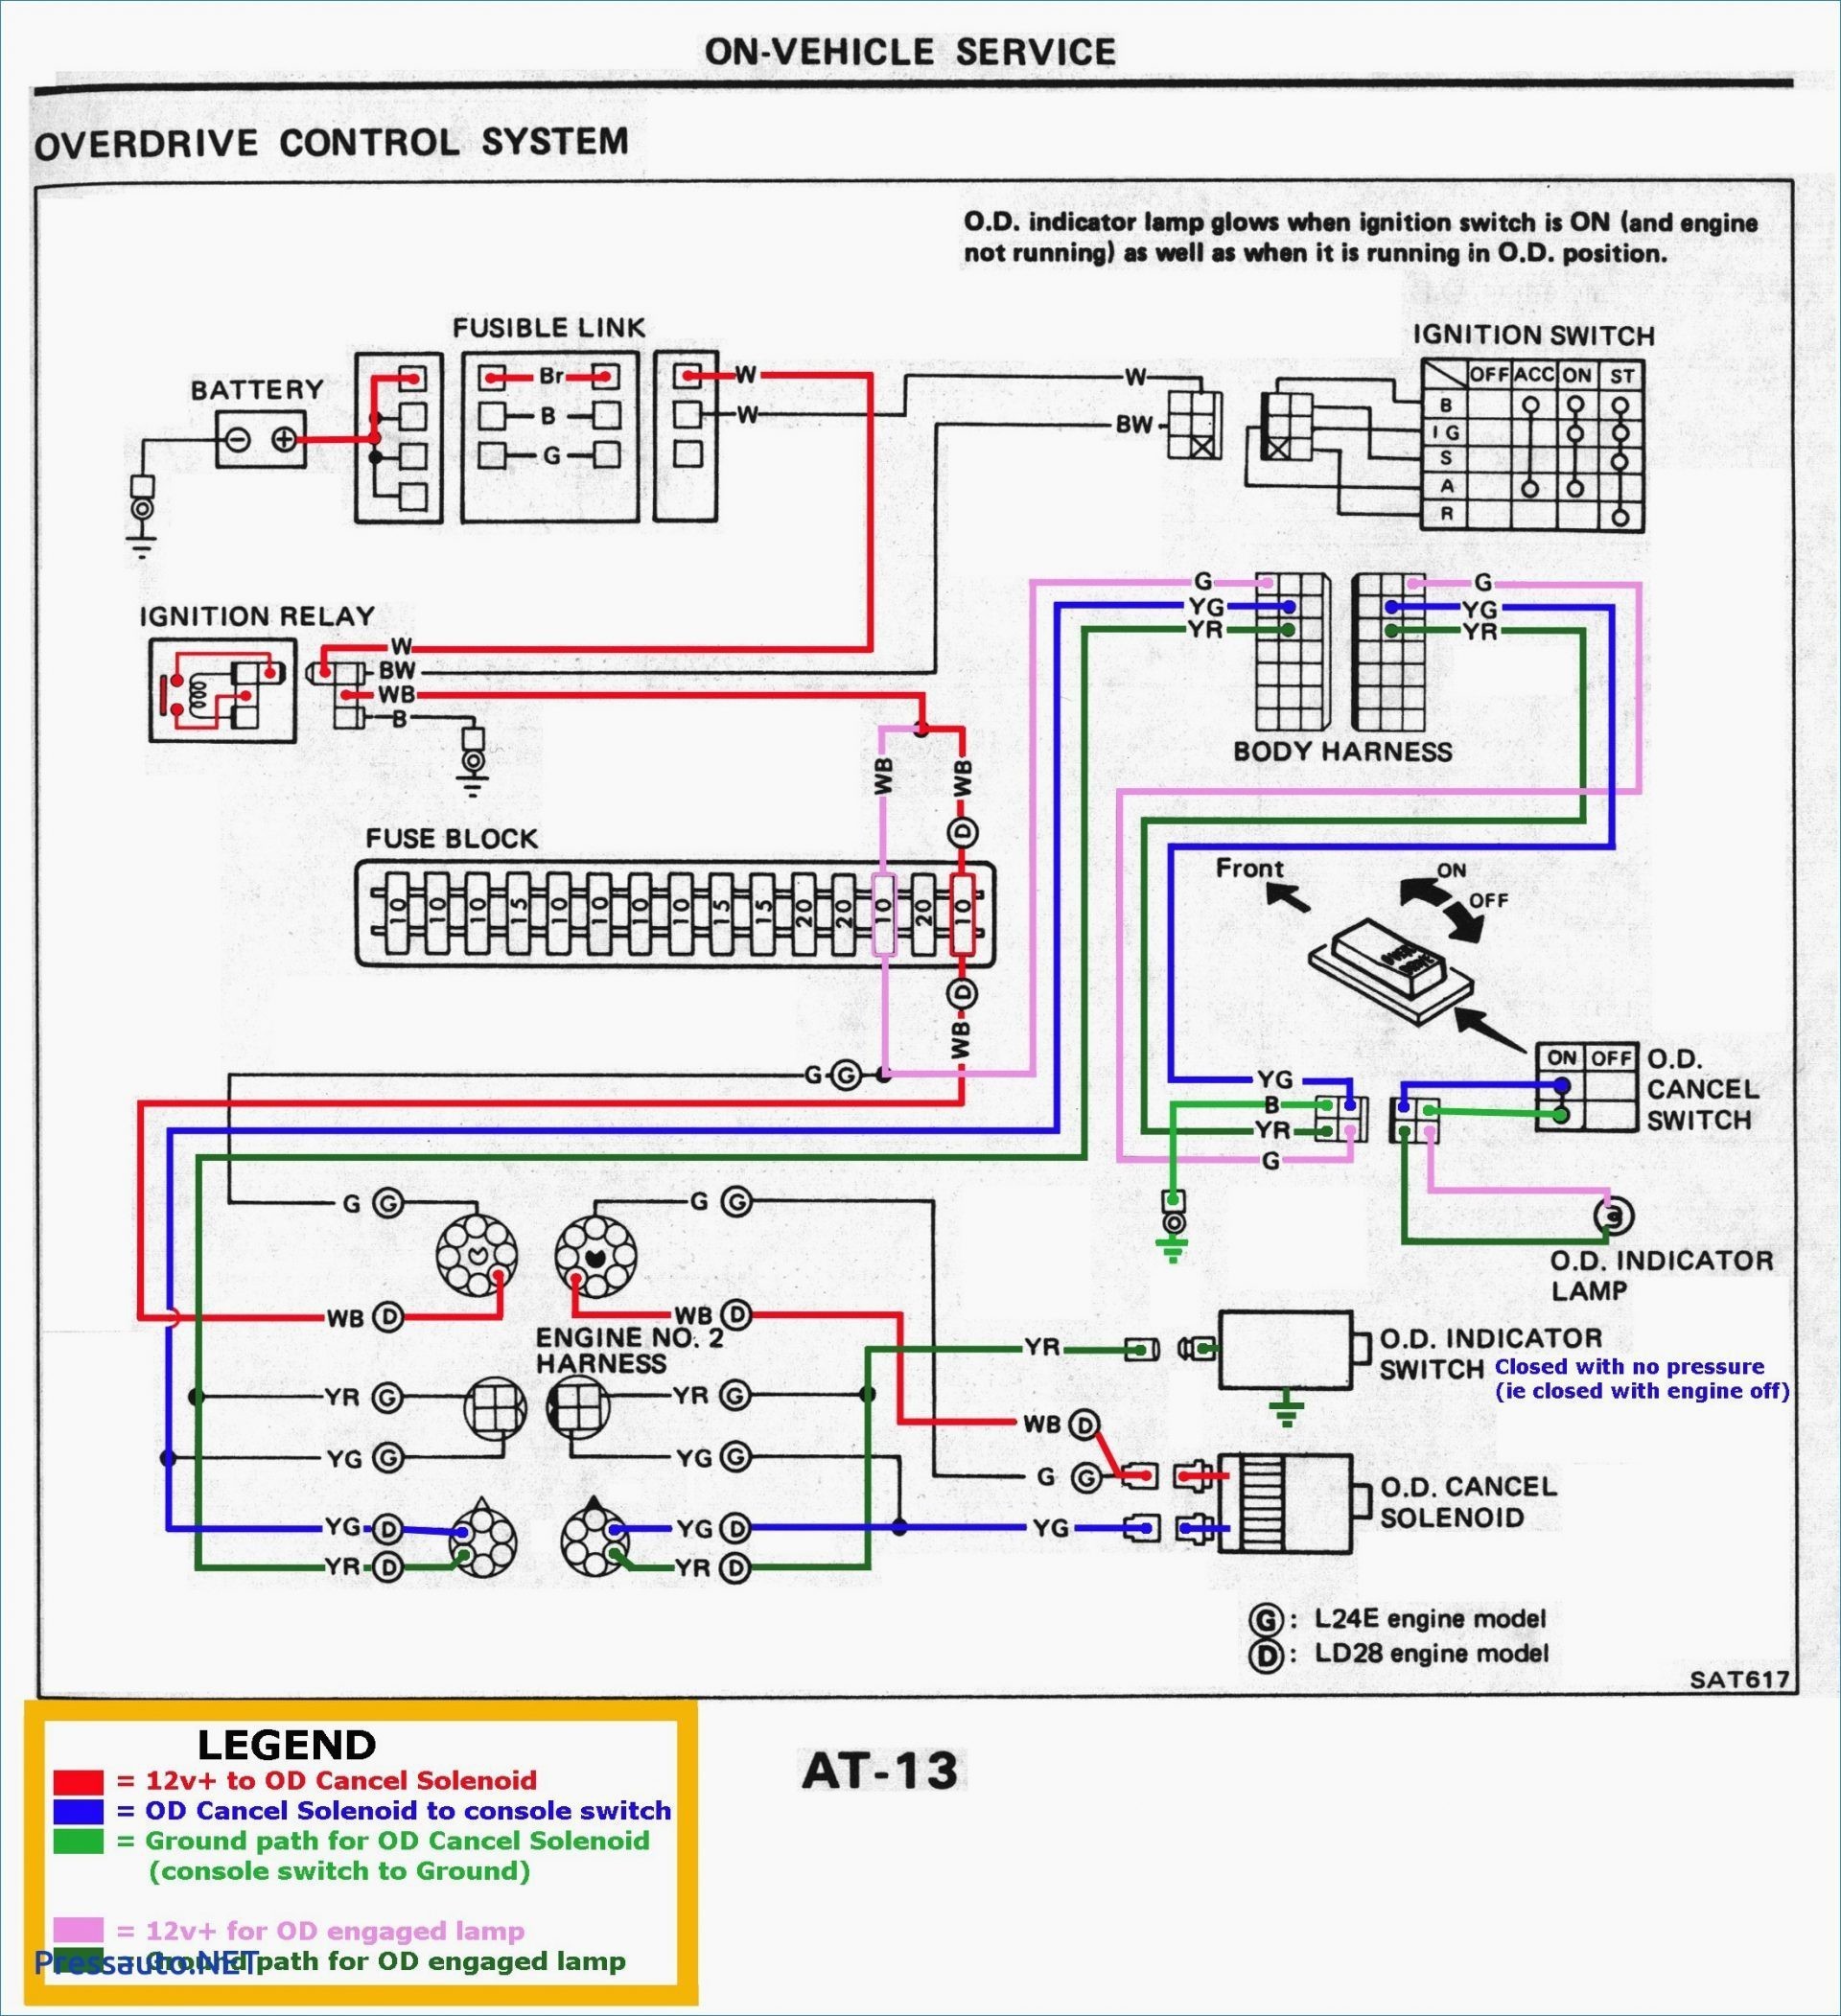 Wiring Diagram Zafira A Pdf Vauxhall astra 2001 Wiring Diagram 4 2l Chevy Engine Of Wiring Diagram Zafira A Pdf